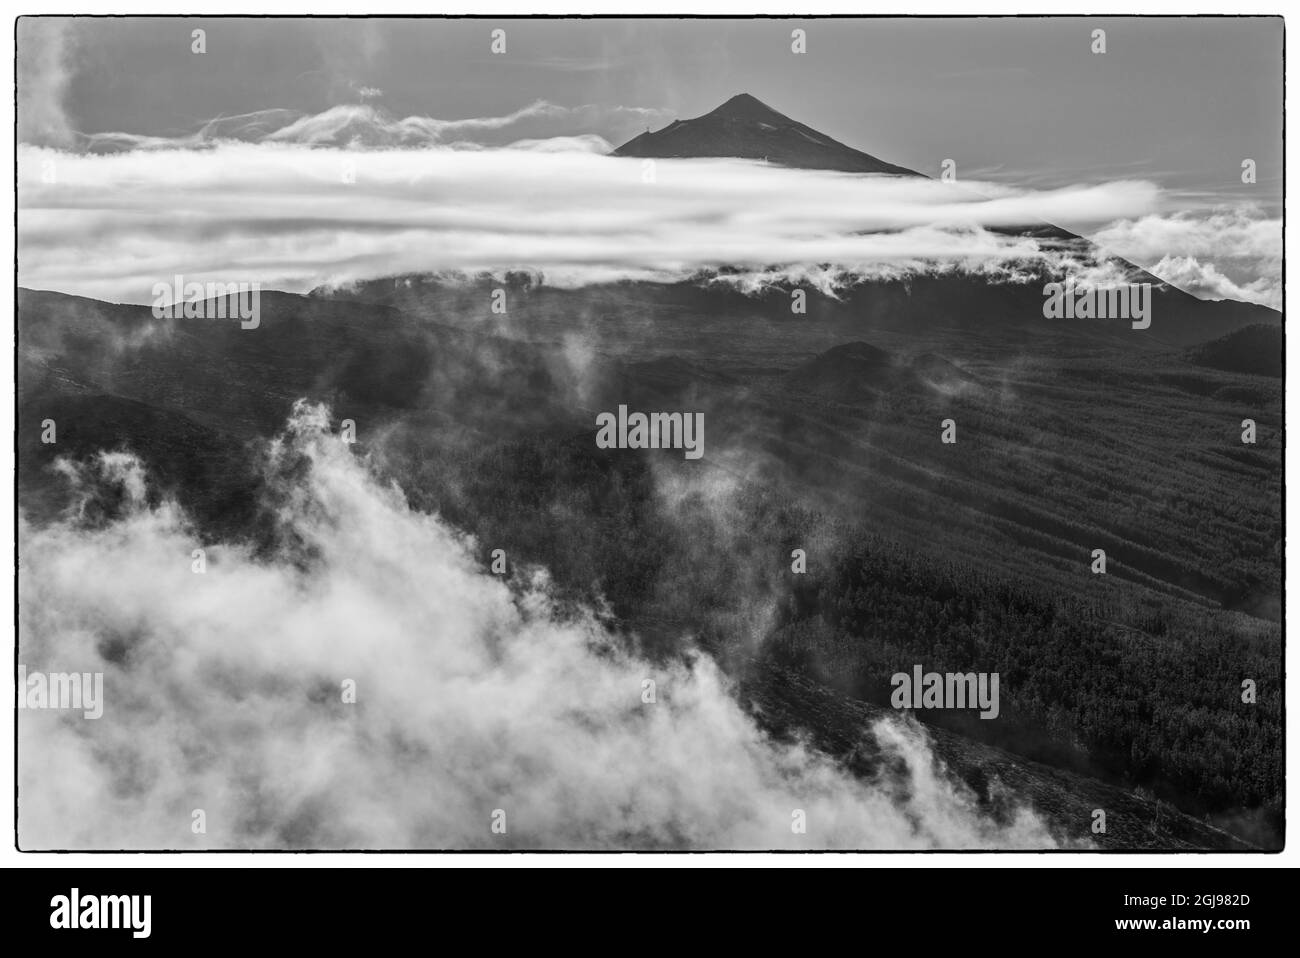 Spain, Canary Islands, Tenerife Island, El Teide Mountain, mountain landscape with fog Stock Photo